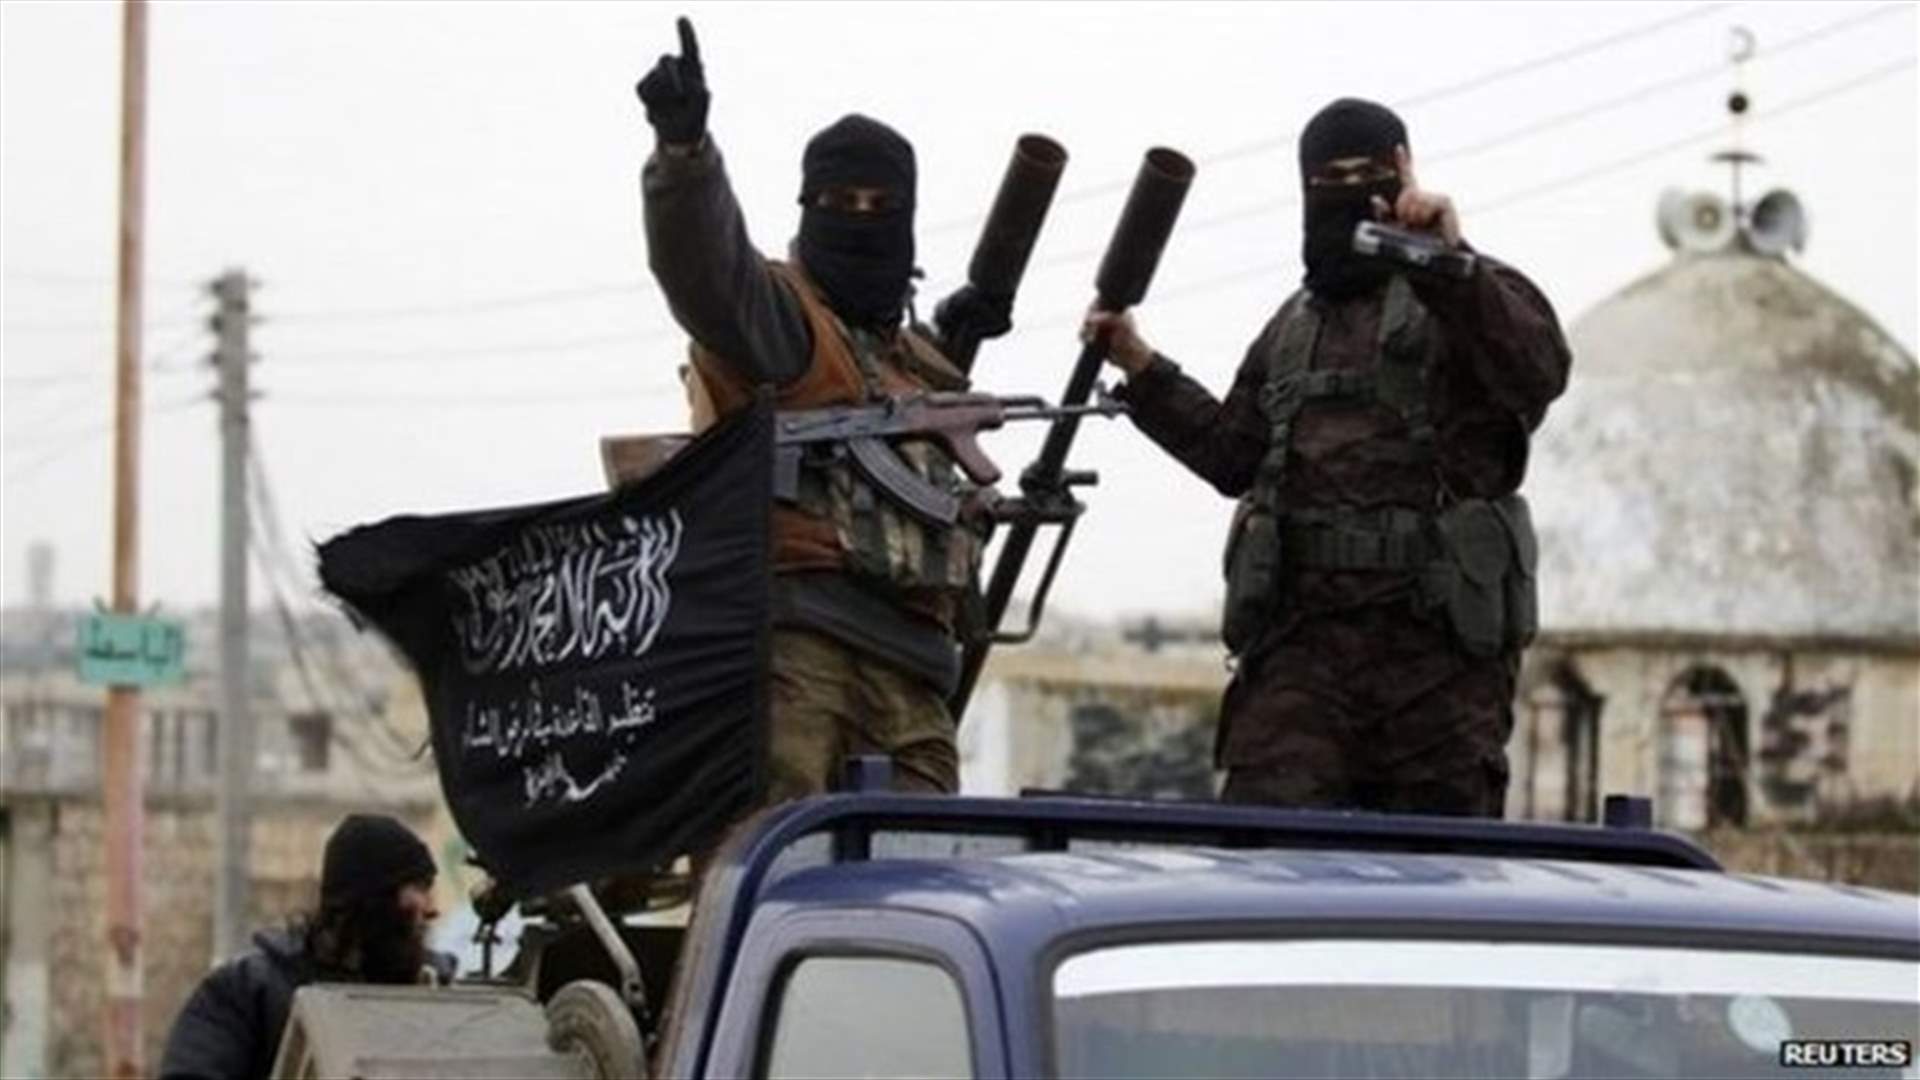 Nusra captures leader, fighters of Western-backed rebels in northern Syria